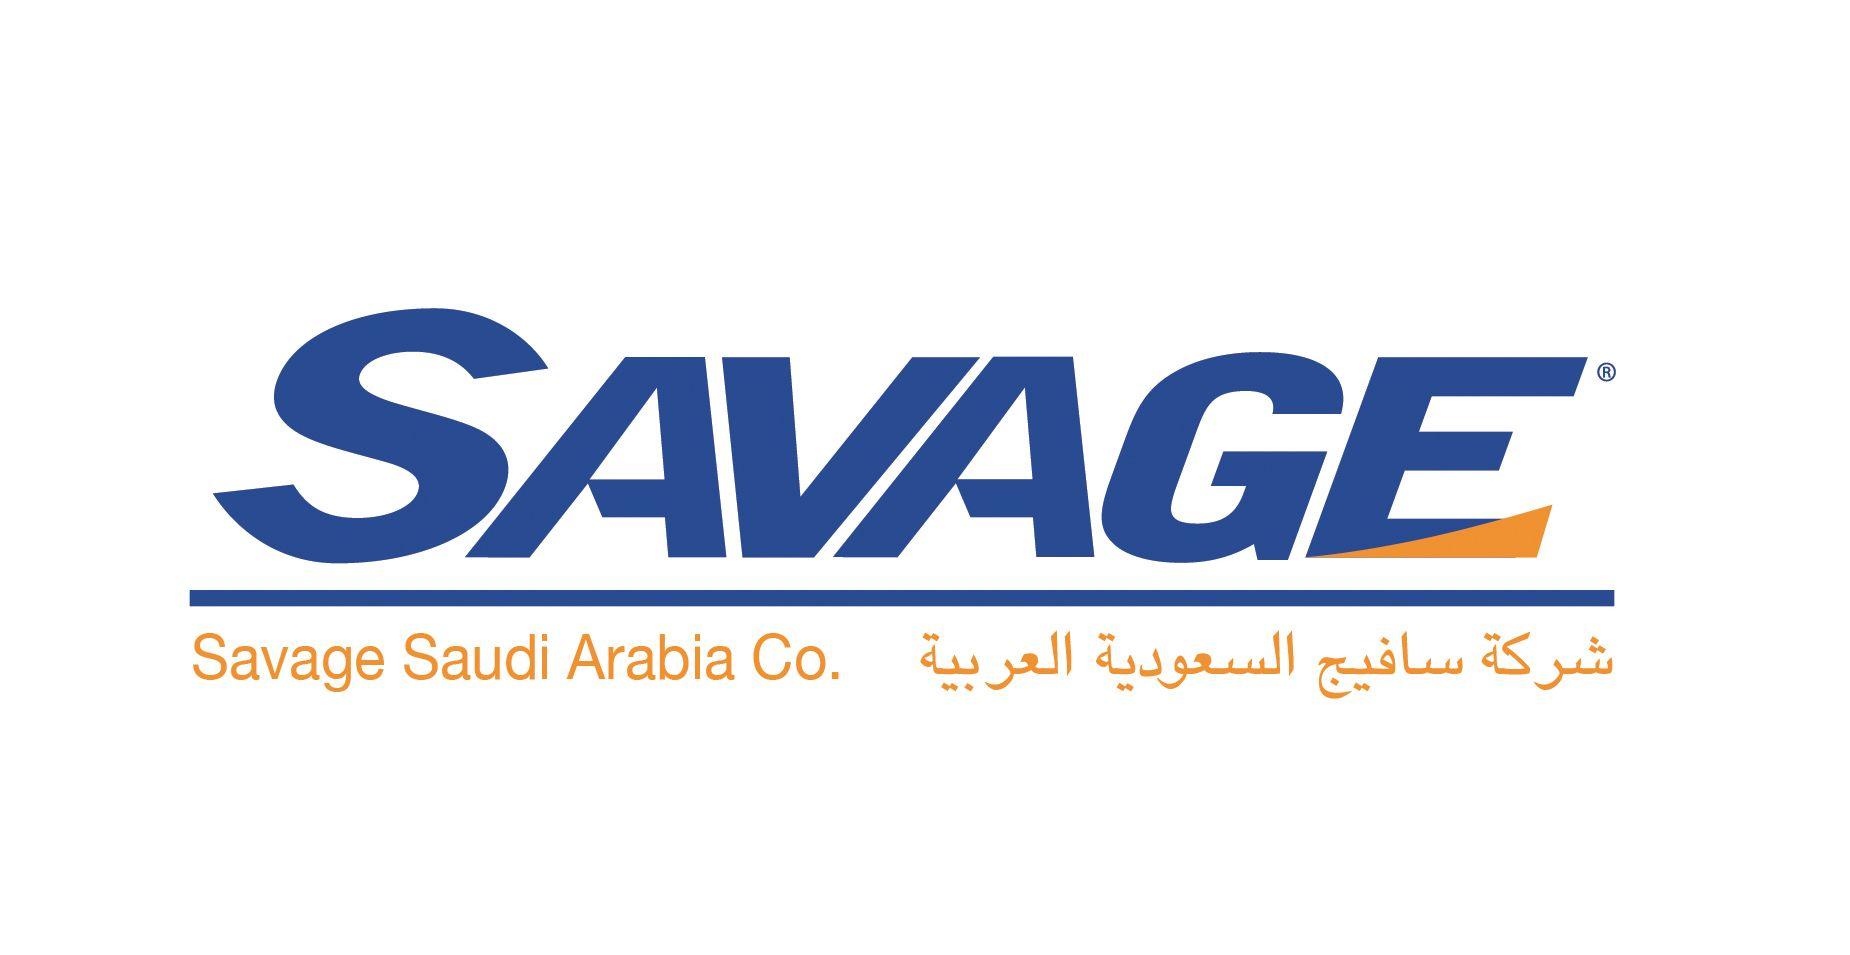 Savage Equipment Logo - Savage Saudi Arabia Delivers Locomotives and Equipment to Support ...